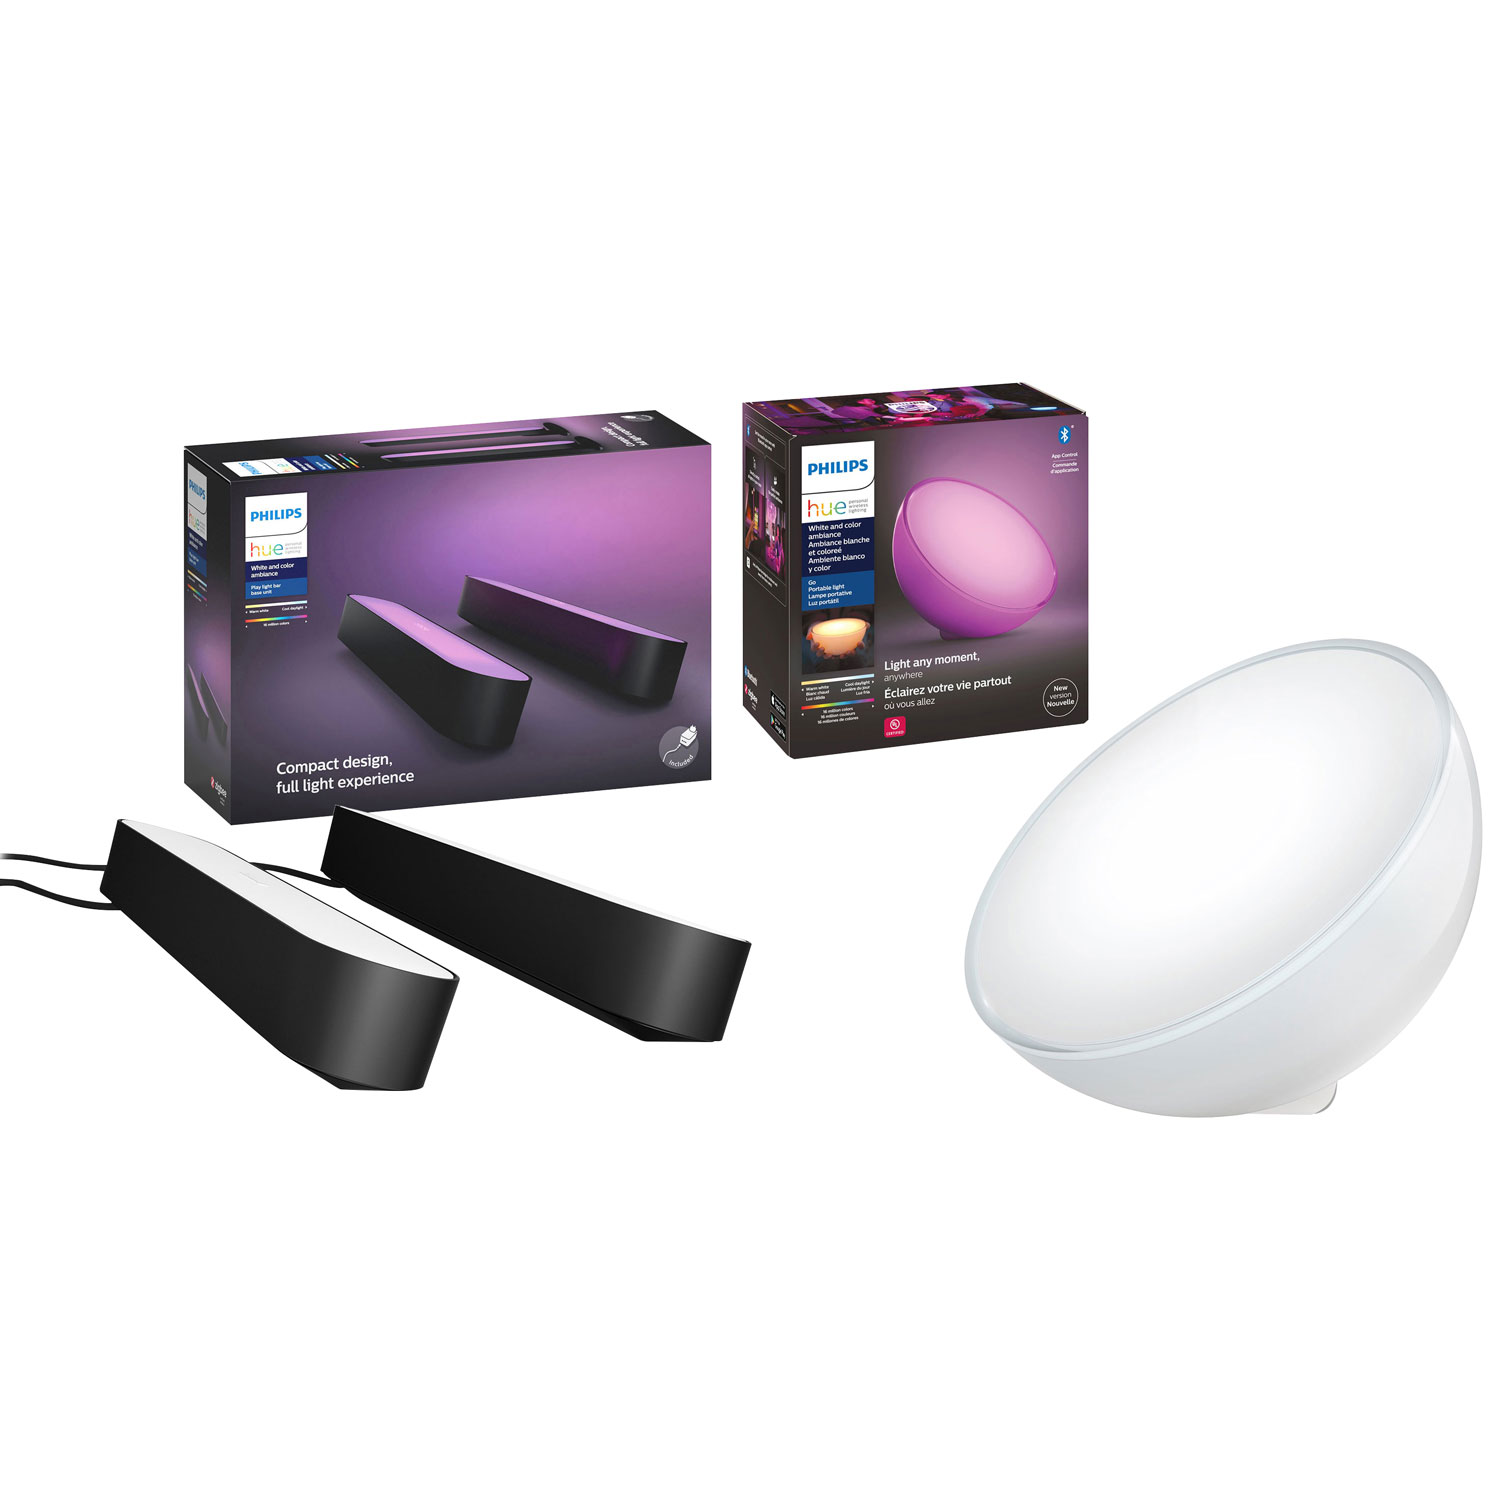 Philips Hue Play Smart LED Light Bar Kit (2 Pack ) & Go Bluetooth Smart LED Light - Black